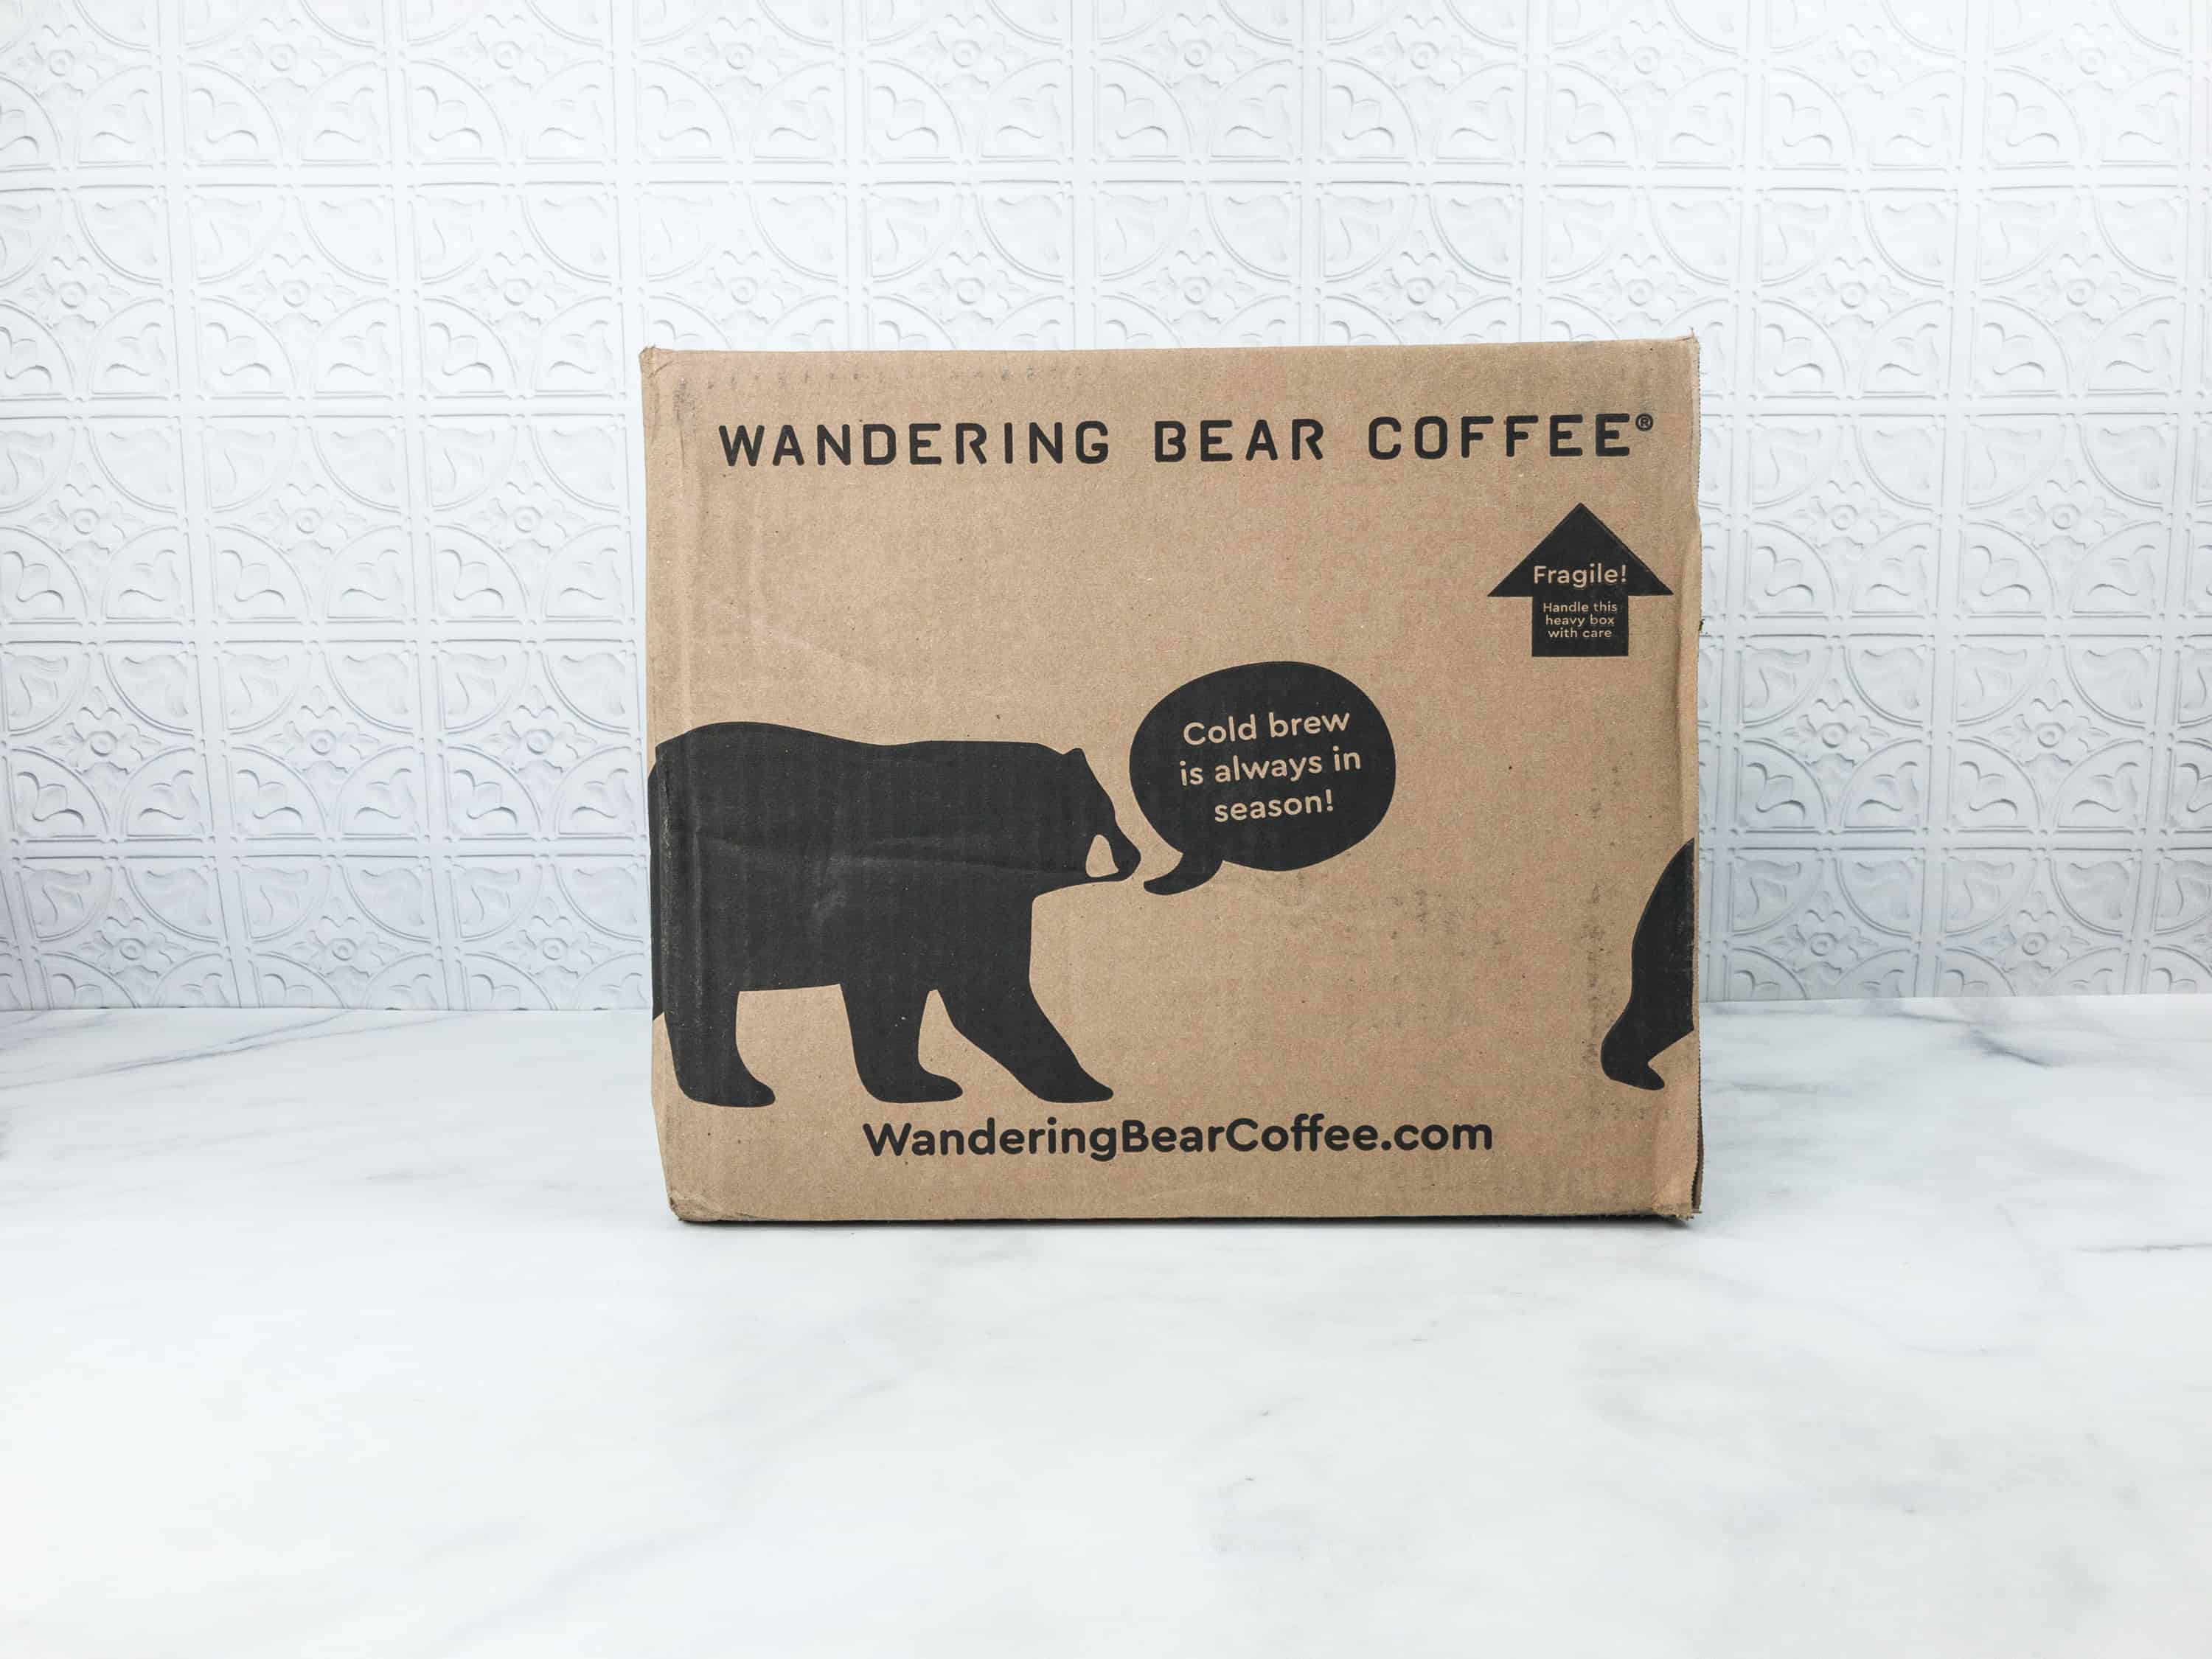 wandering bear coffee in stores